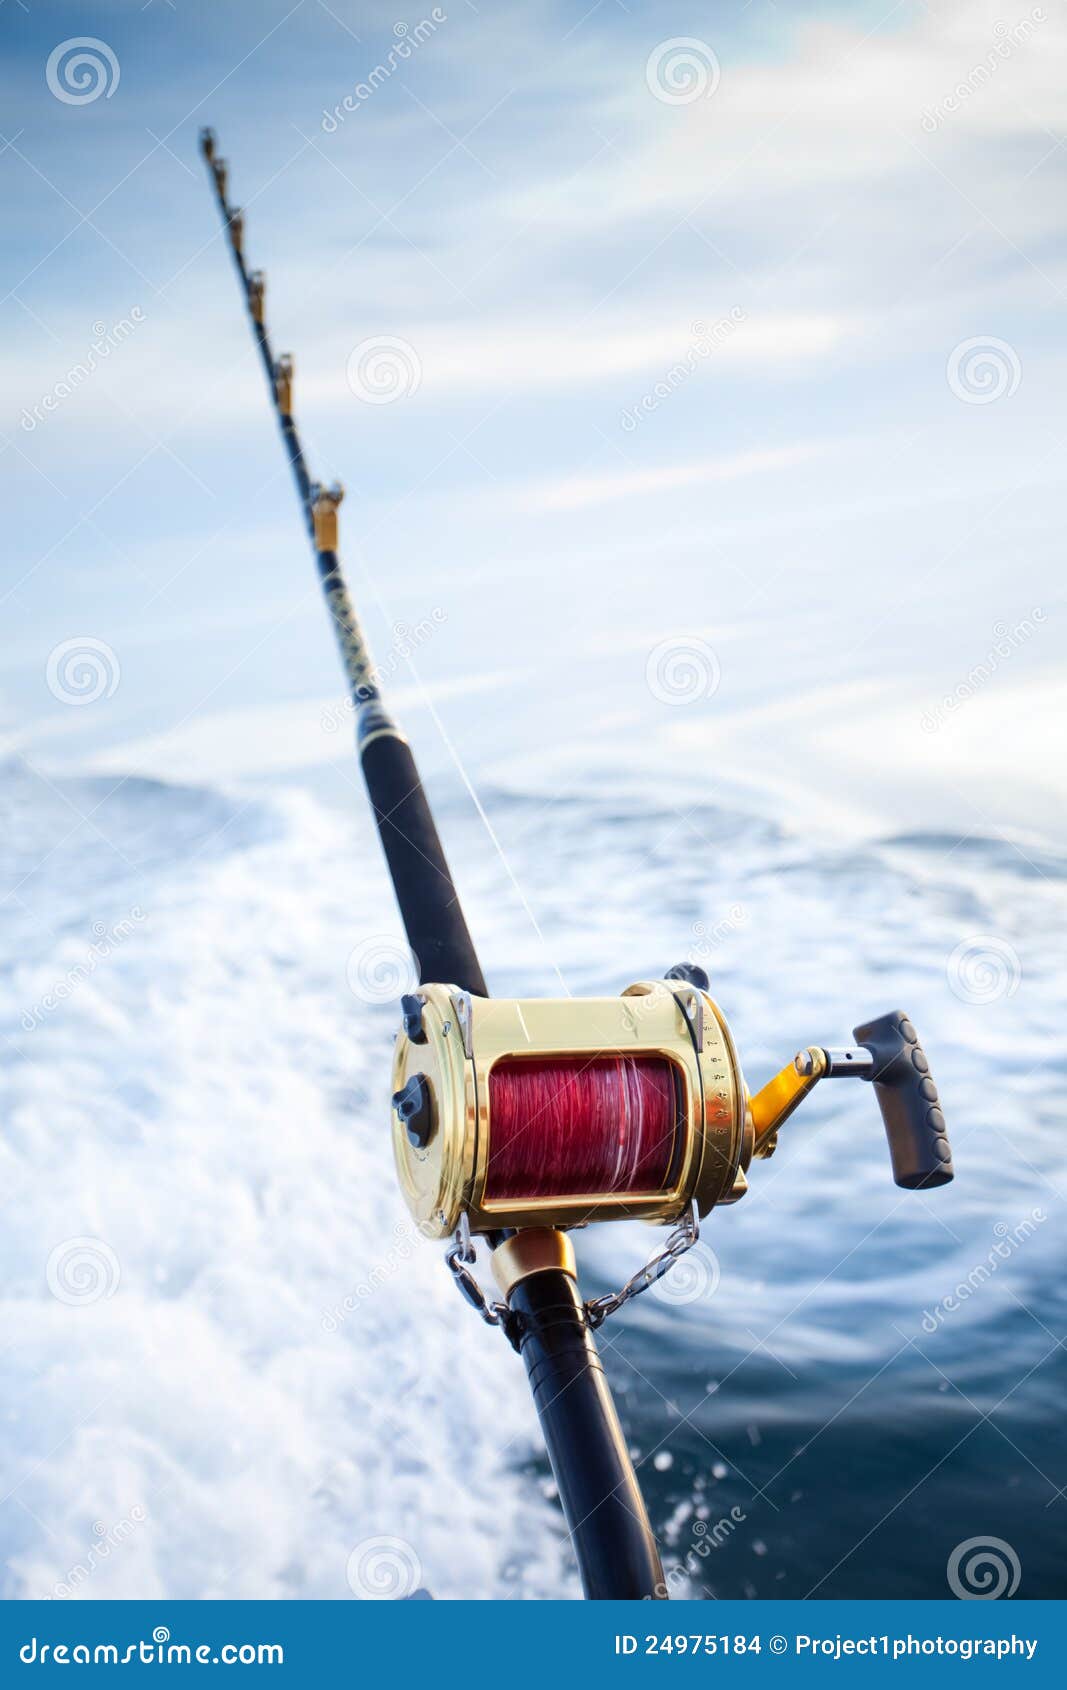 big game fishing reel in natural setting mr no pr no 2 294 2